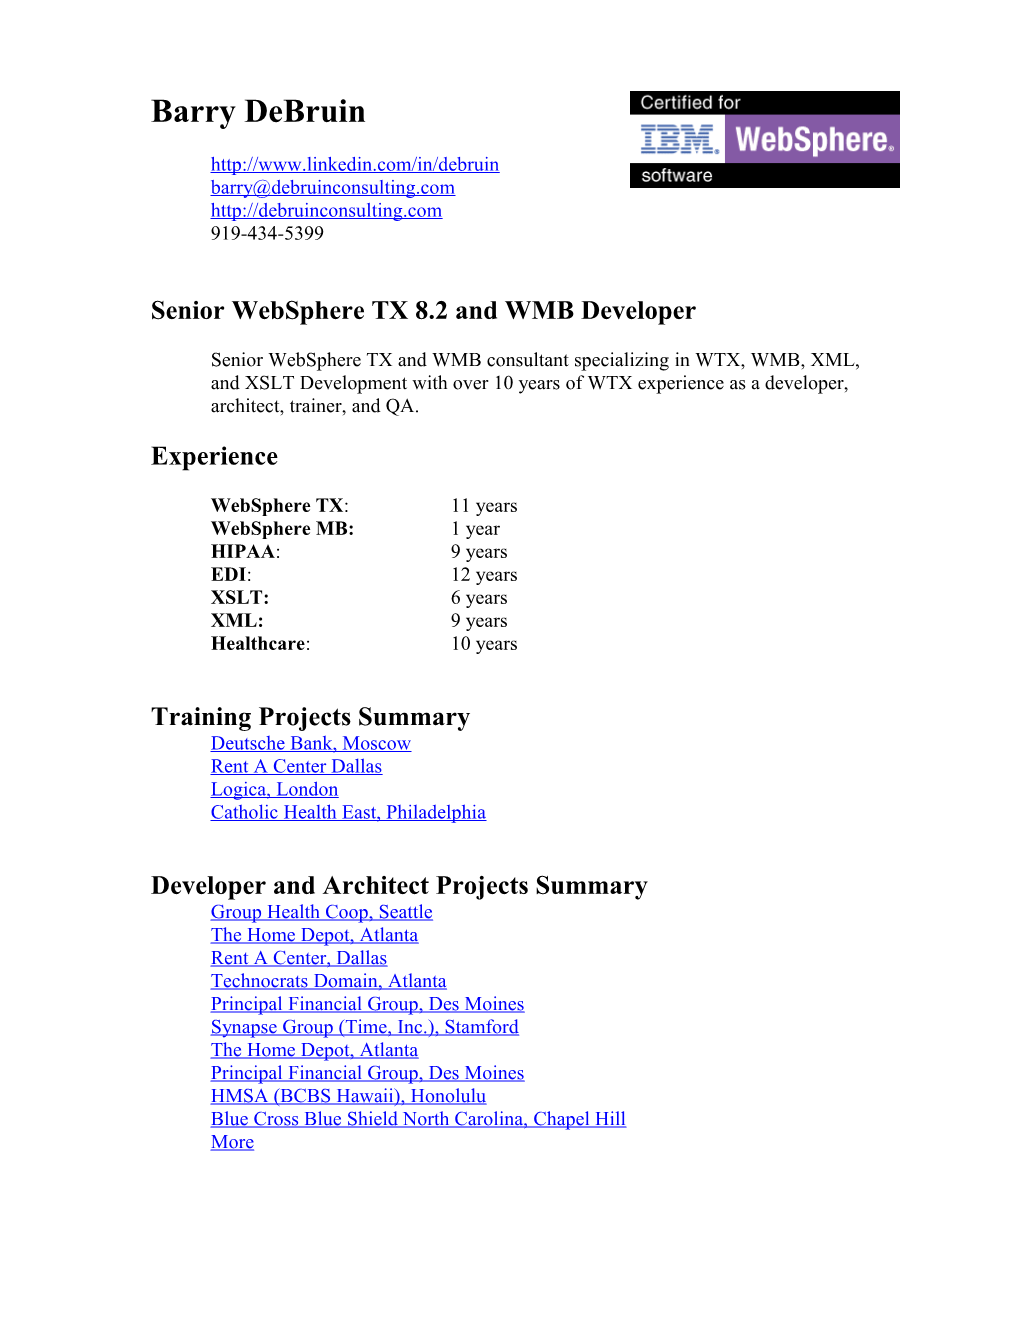 Senior Webspheretx 8.2 and WMB Developer